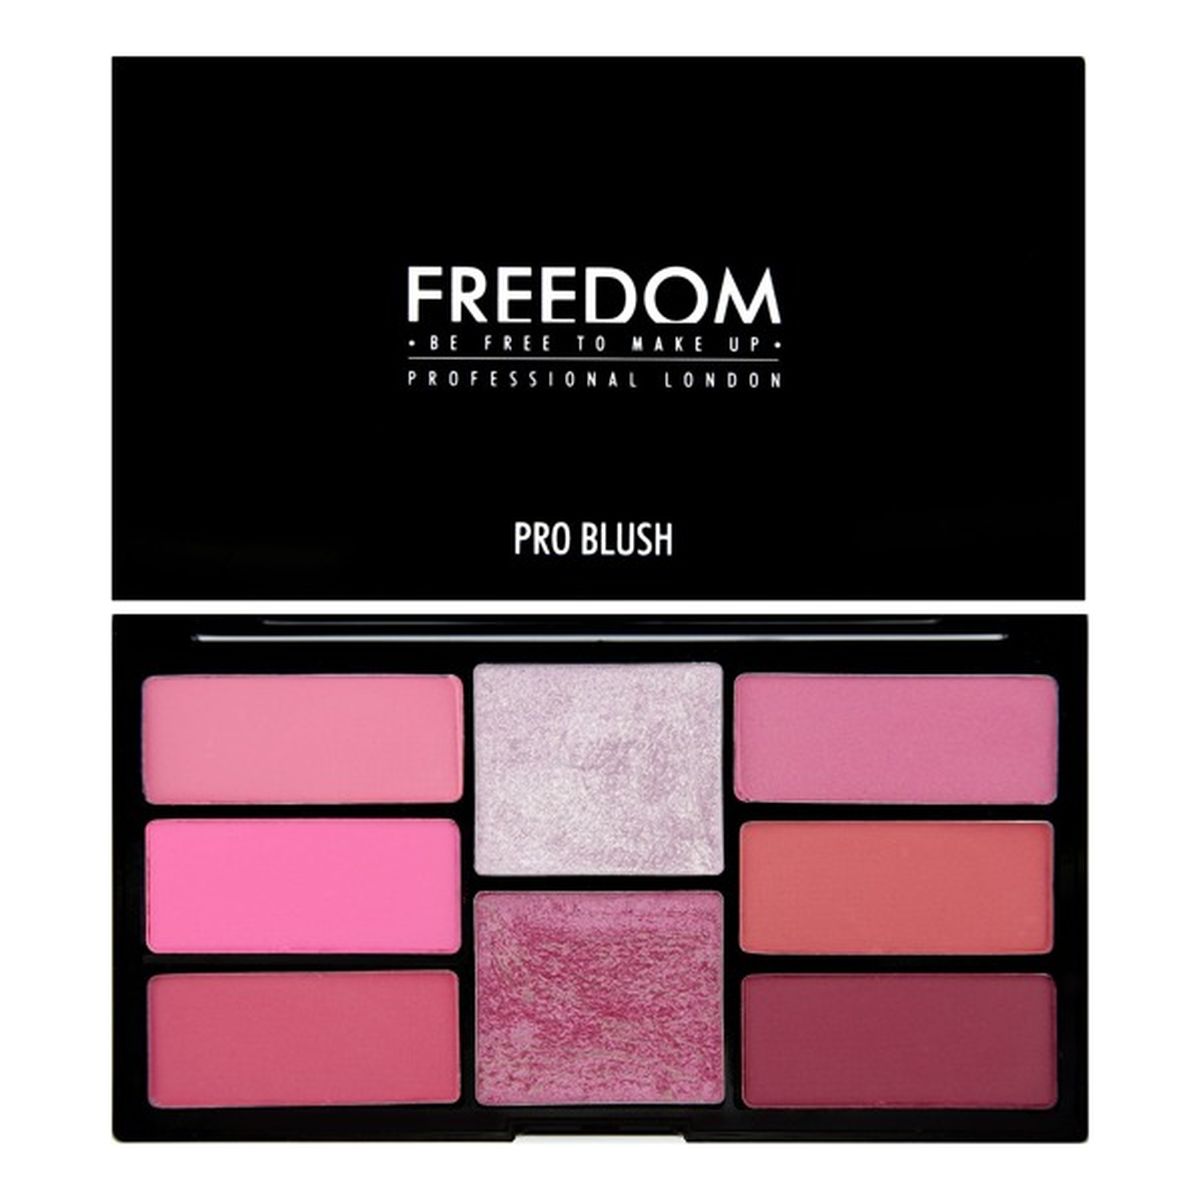 Freedom Makeup Pro Blush Palette Pink and Baked Zestaw do makijażu 15g